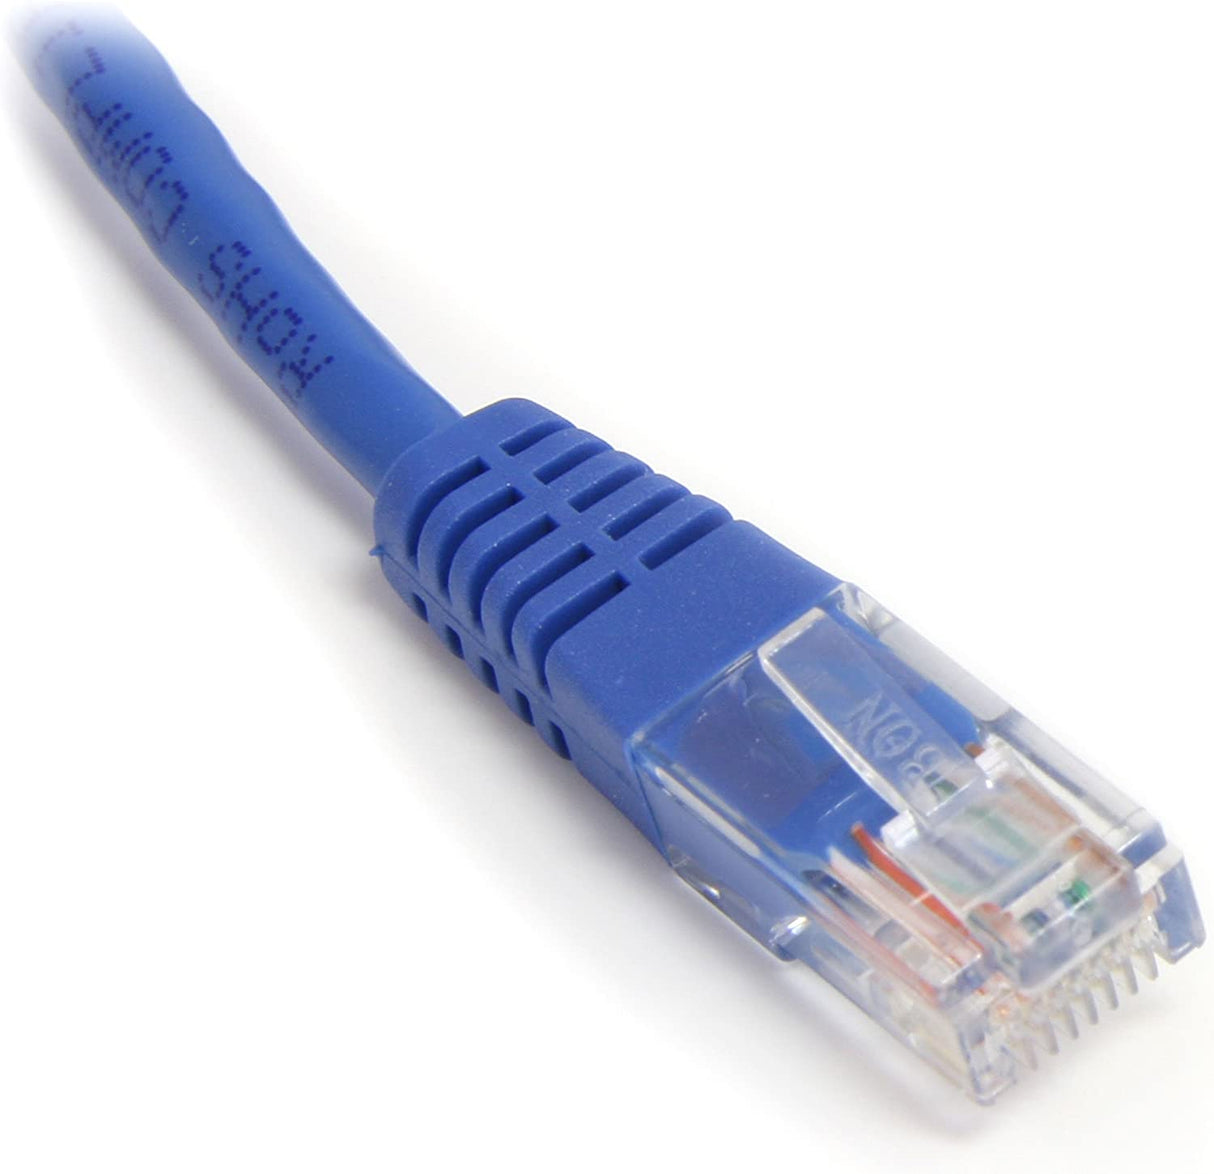 StarTech.com Cat5e Ethernet Cable - 50 ft - Blue - Patch Cable - Molded Cat5e Cable - Long Network Cable - Ethernet Cord - Cat 5e Cable - 50ft (M45PATCH50BL) 50 ft / 15m Blue